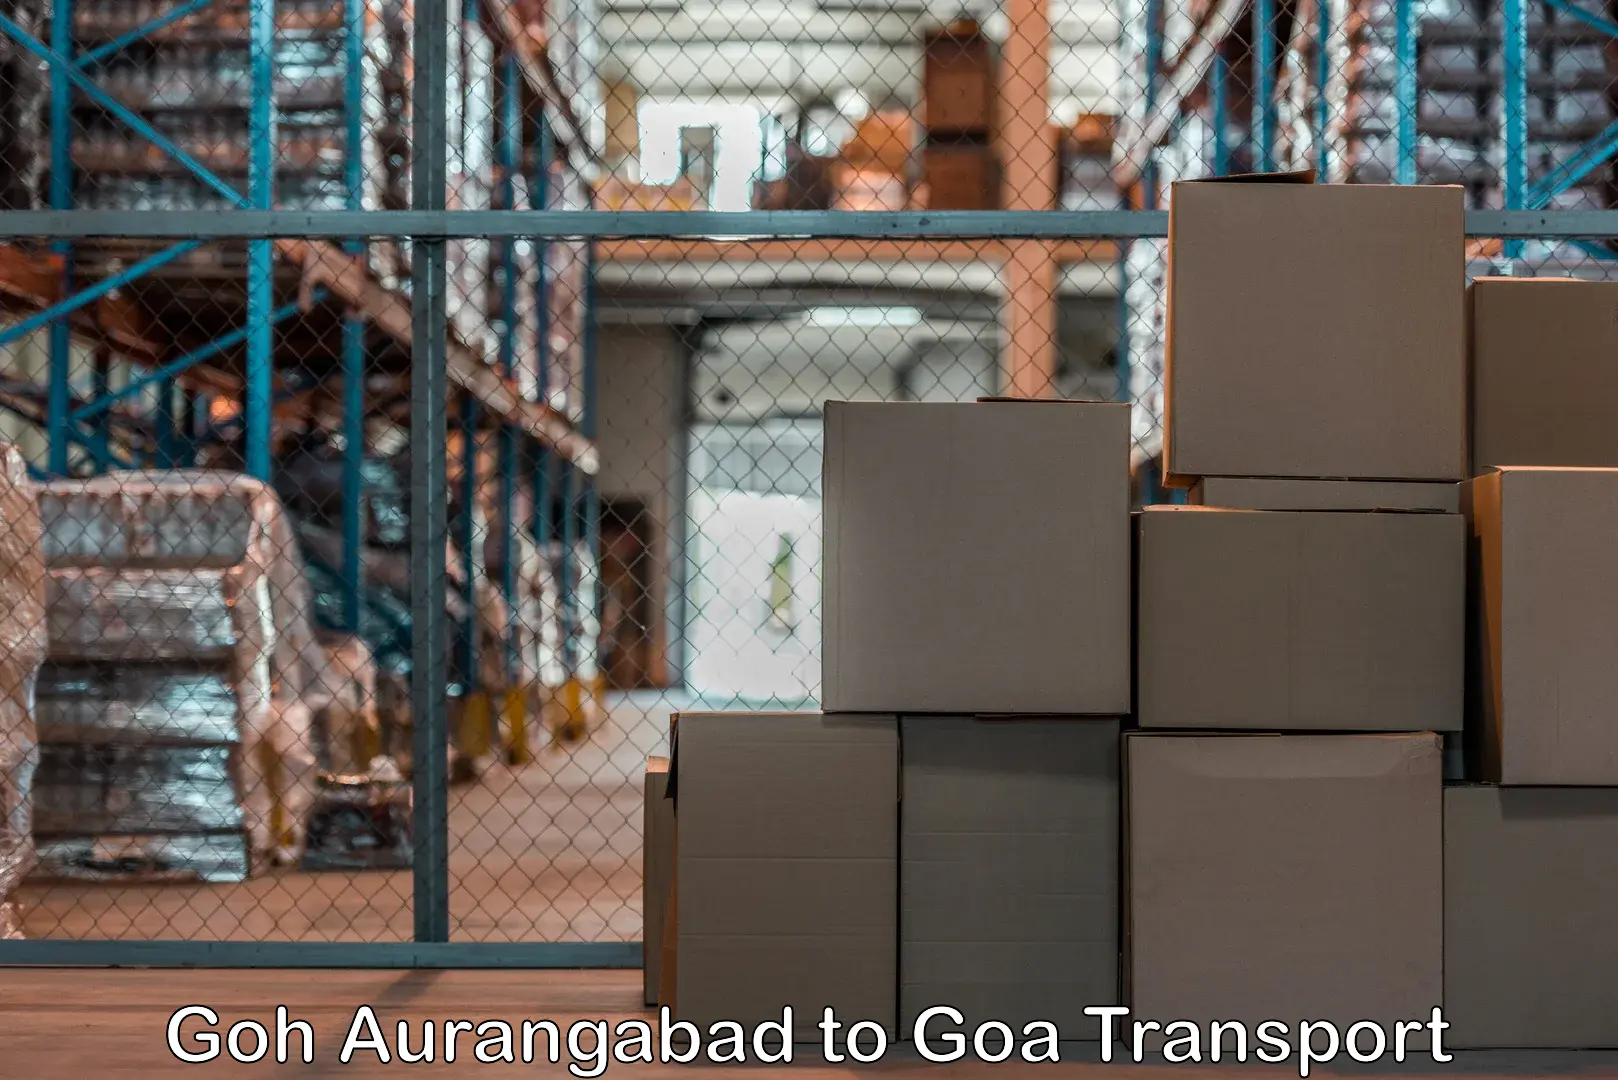 Domestic goods transportation services Goh Aurangabad to Goa